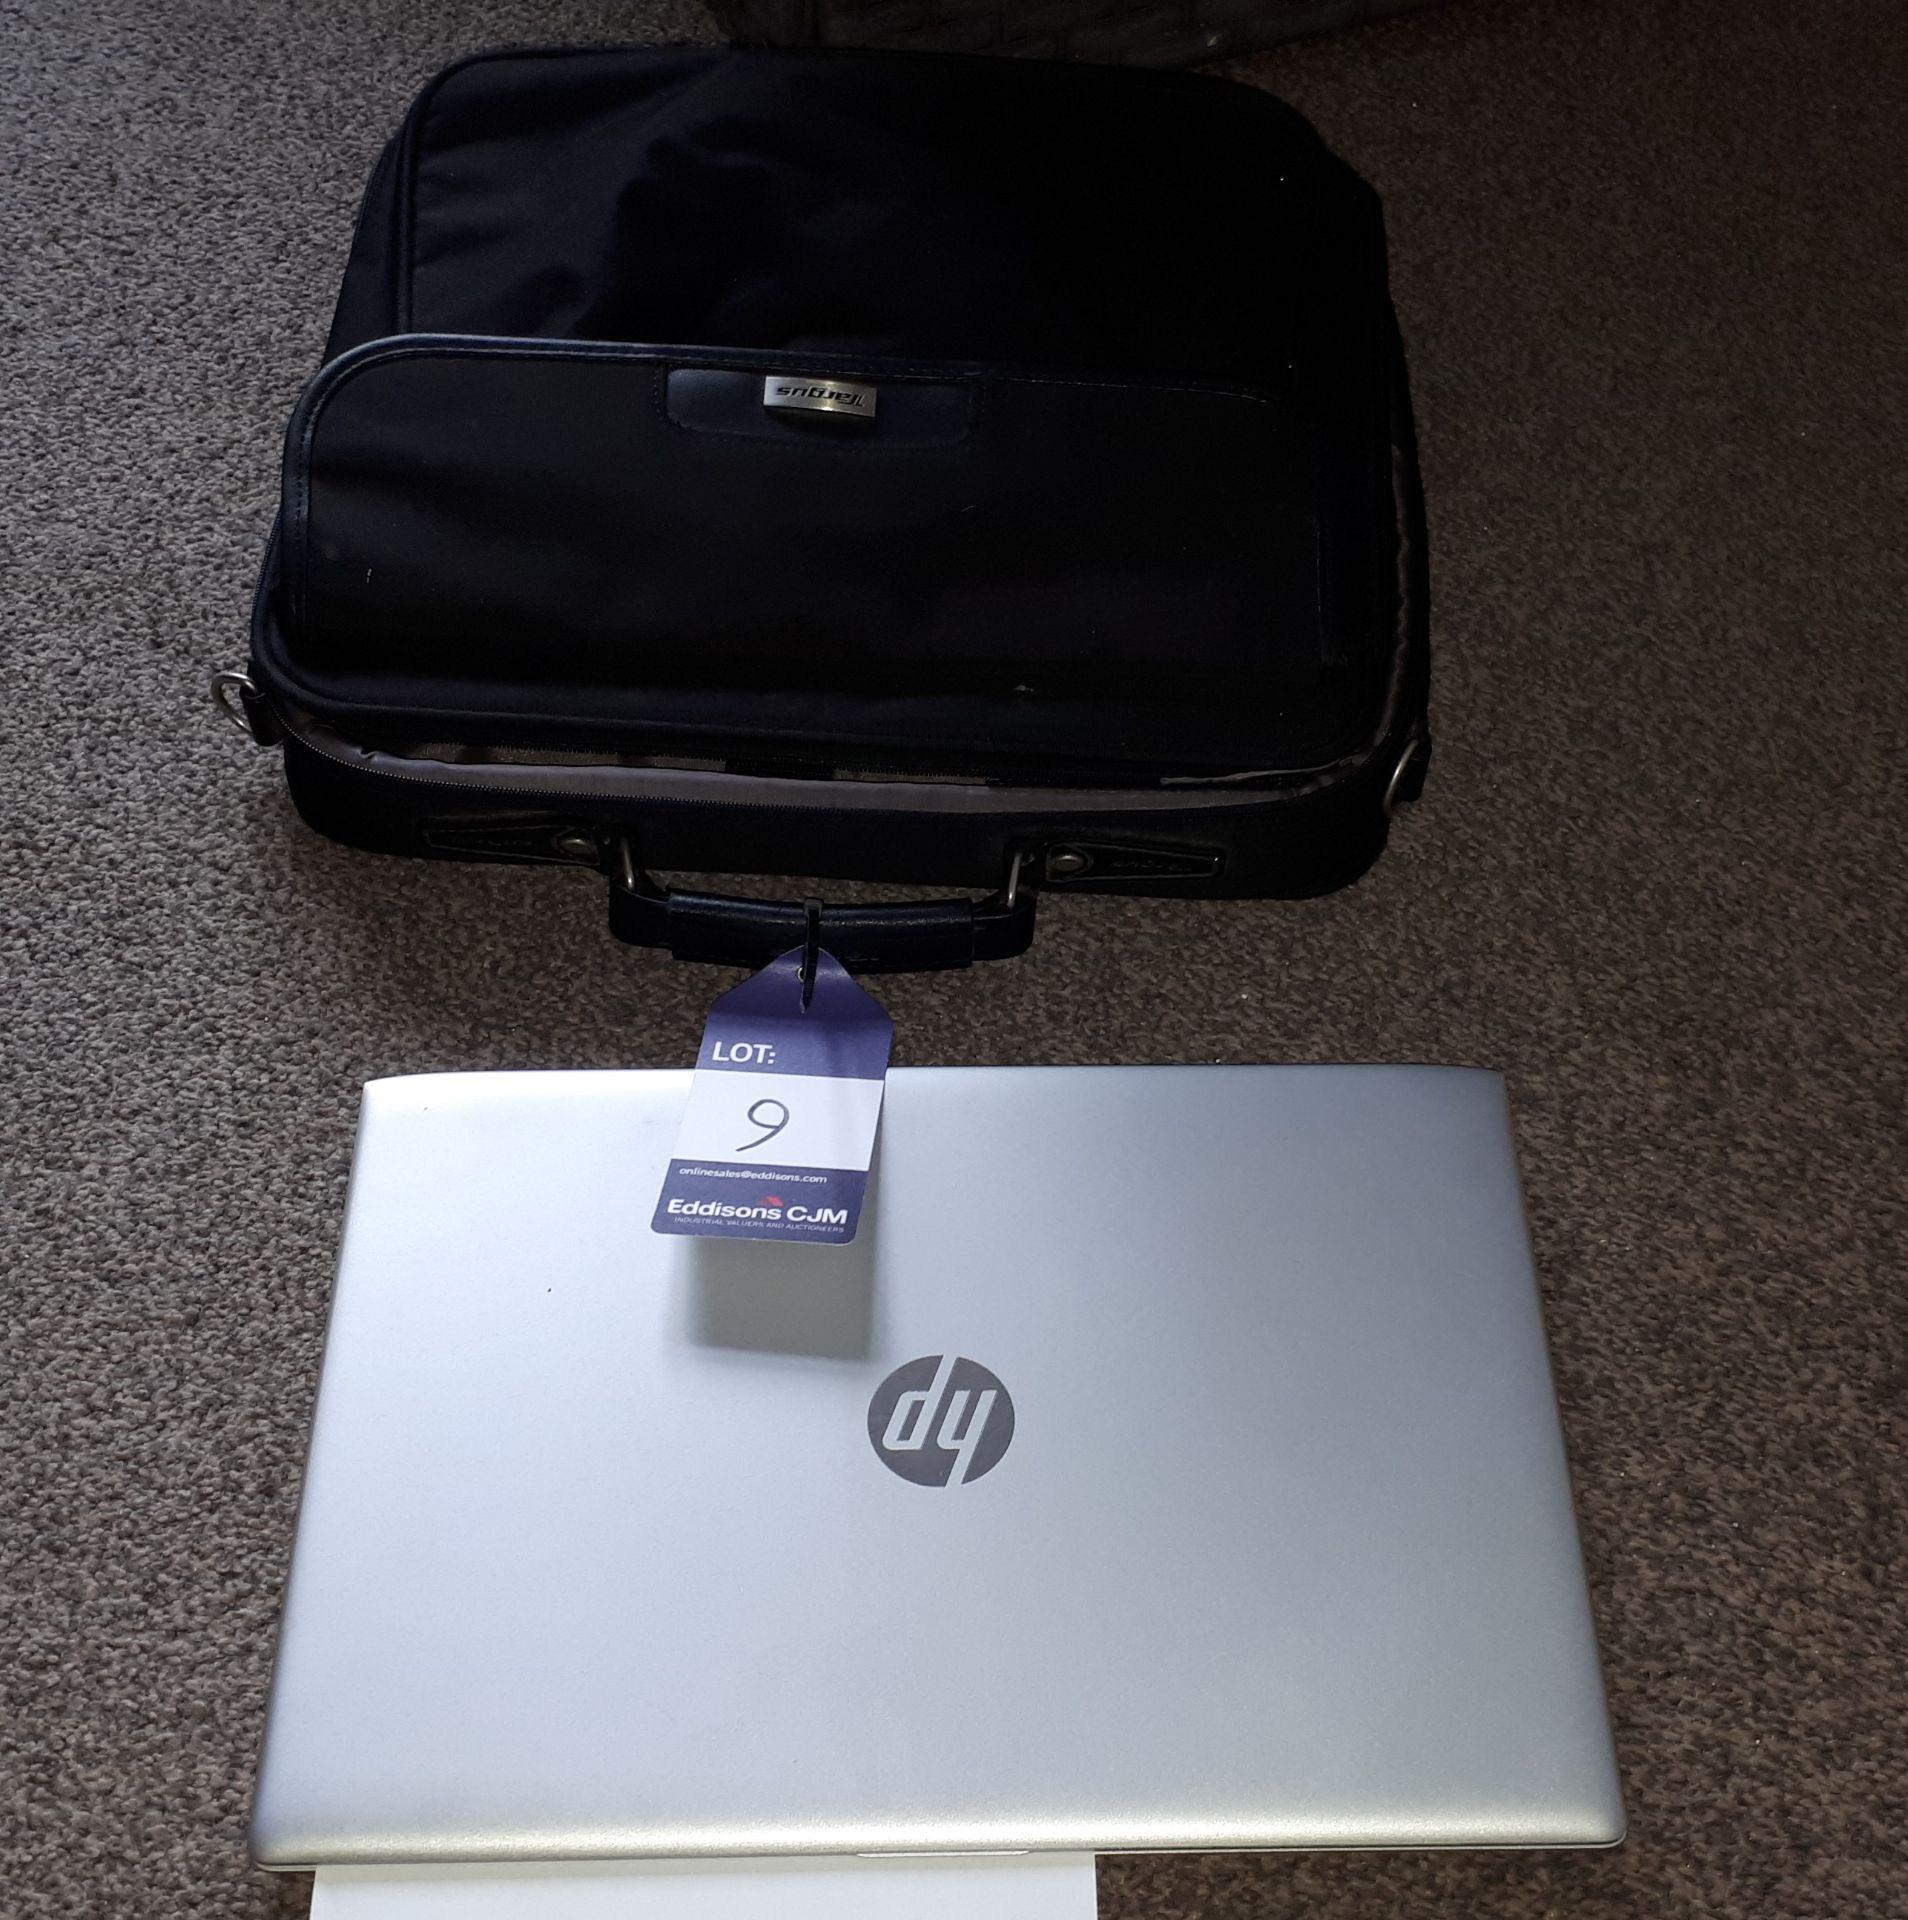 HP ProBook 450 G5 laptop, Serial Number 5CD8228HO6